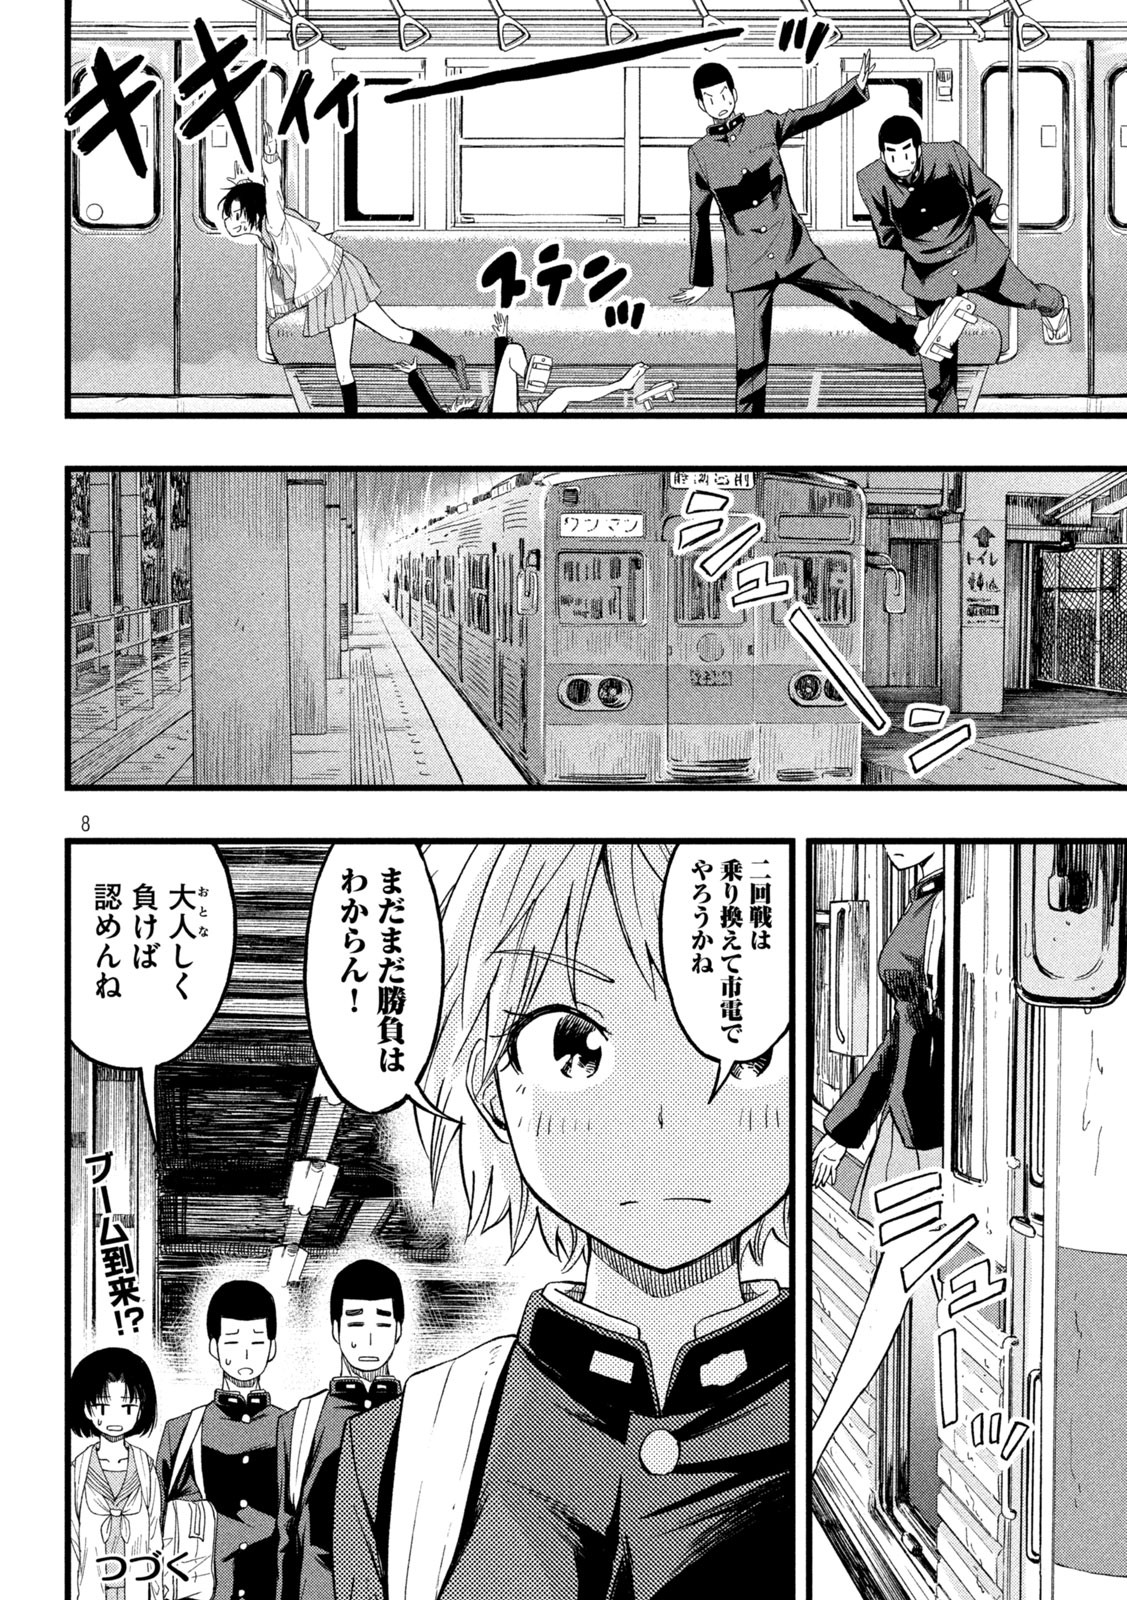 Koharu haru! - Chapter 49 - Page 4